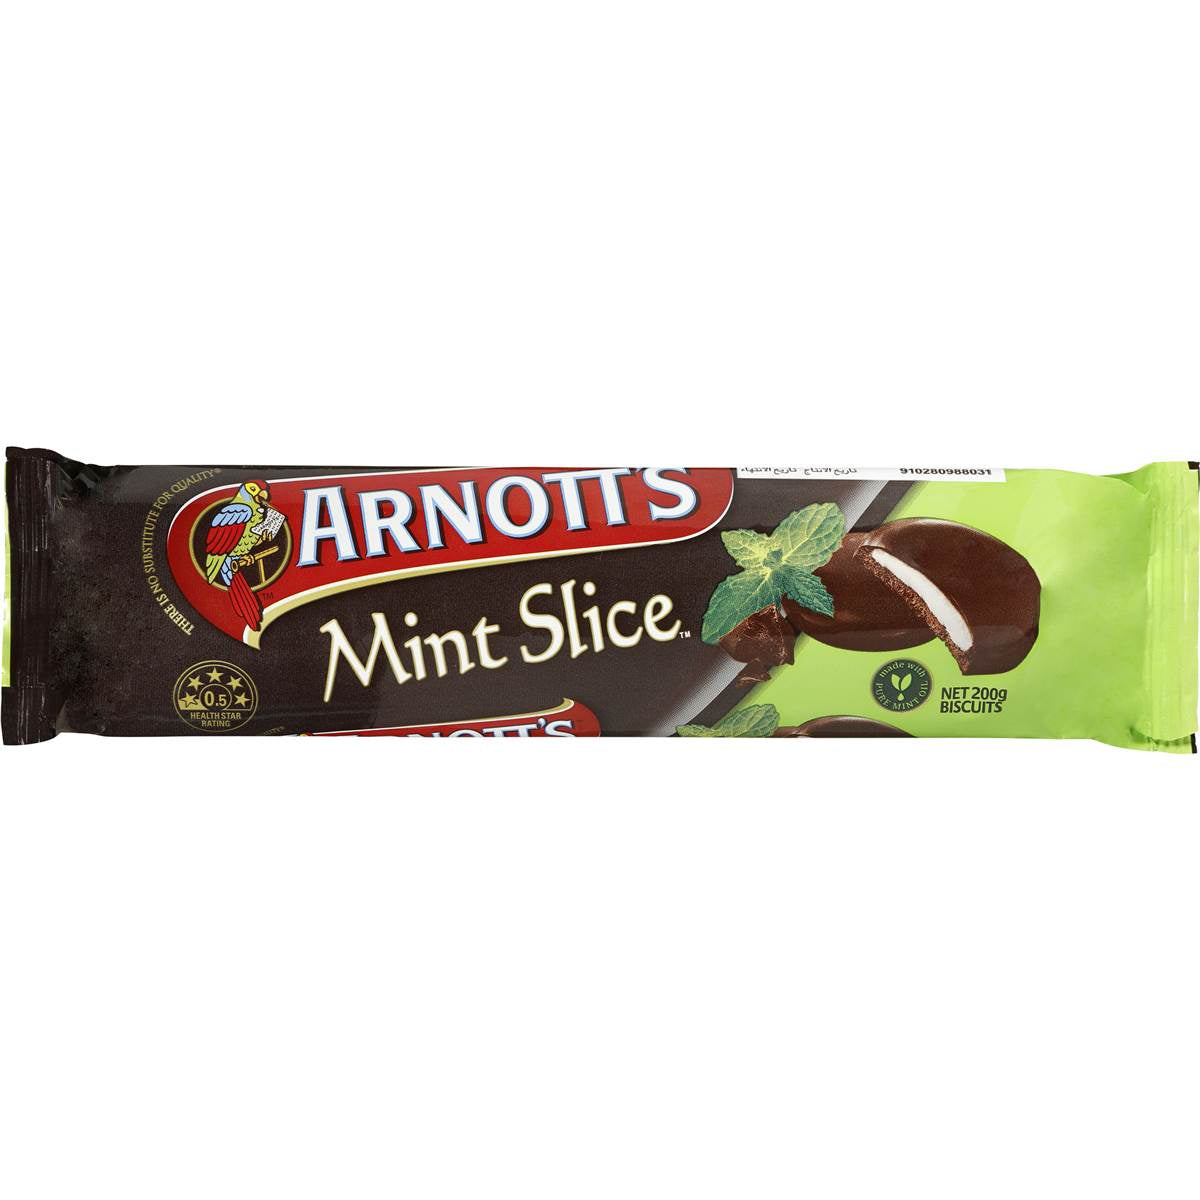 Arnotts Mint Slice 200G